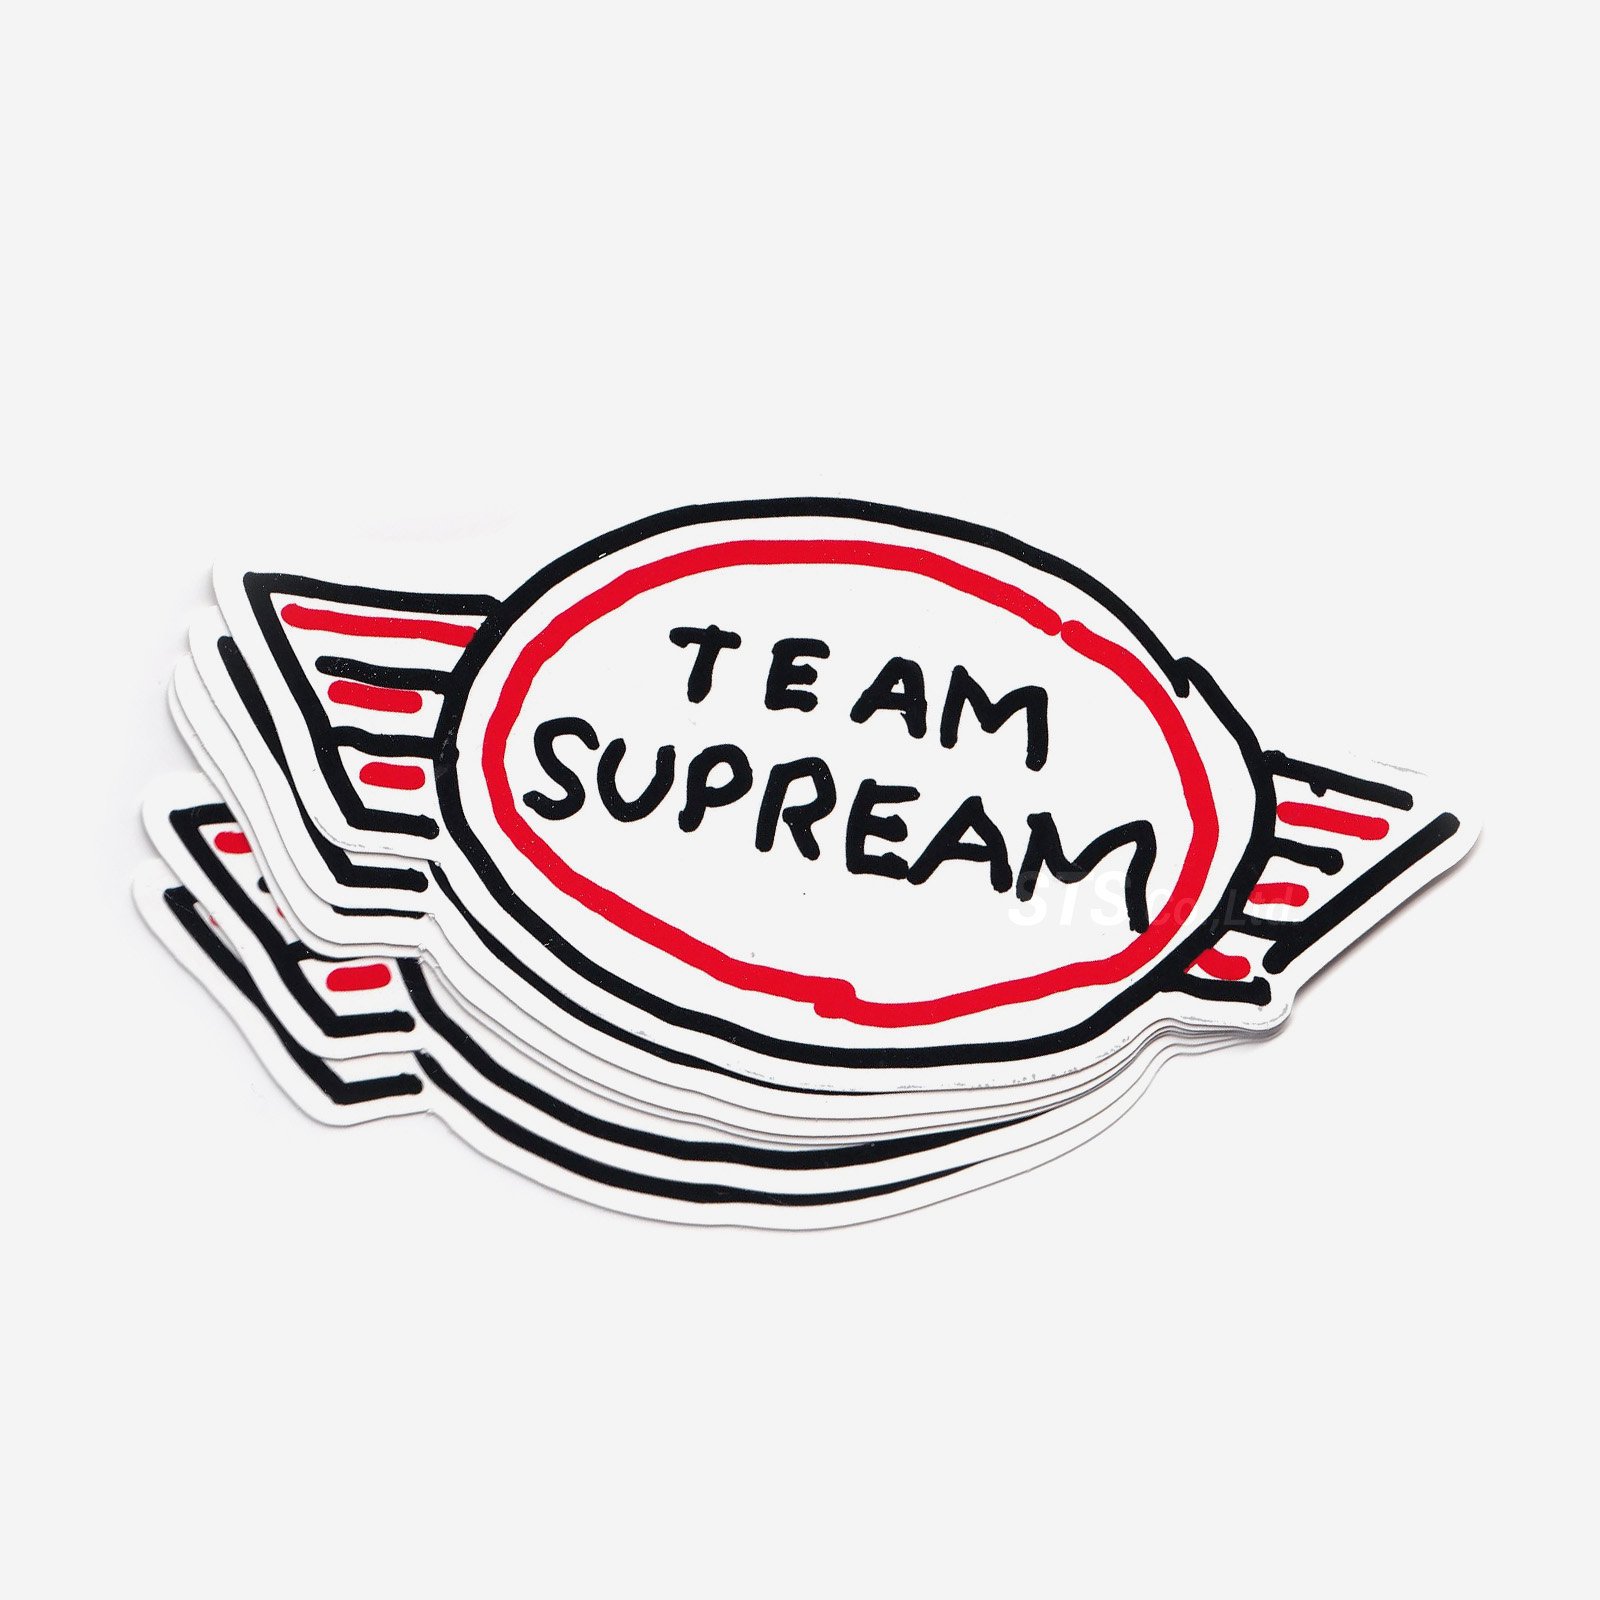 Supreme - Gonz Portrait Sticker | Team SUPREAMのロゴがステッカーで ...